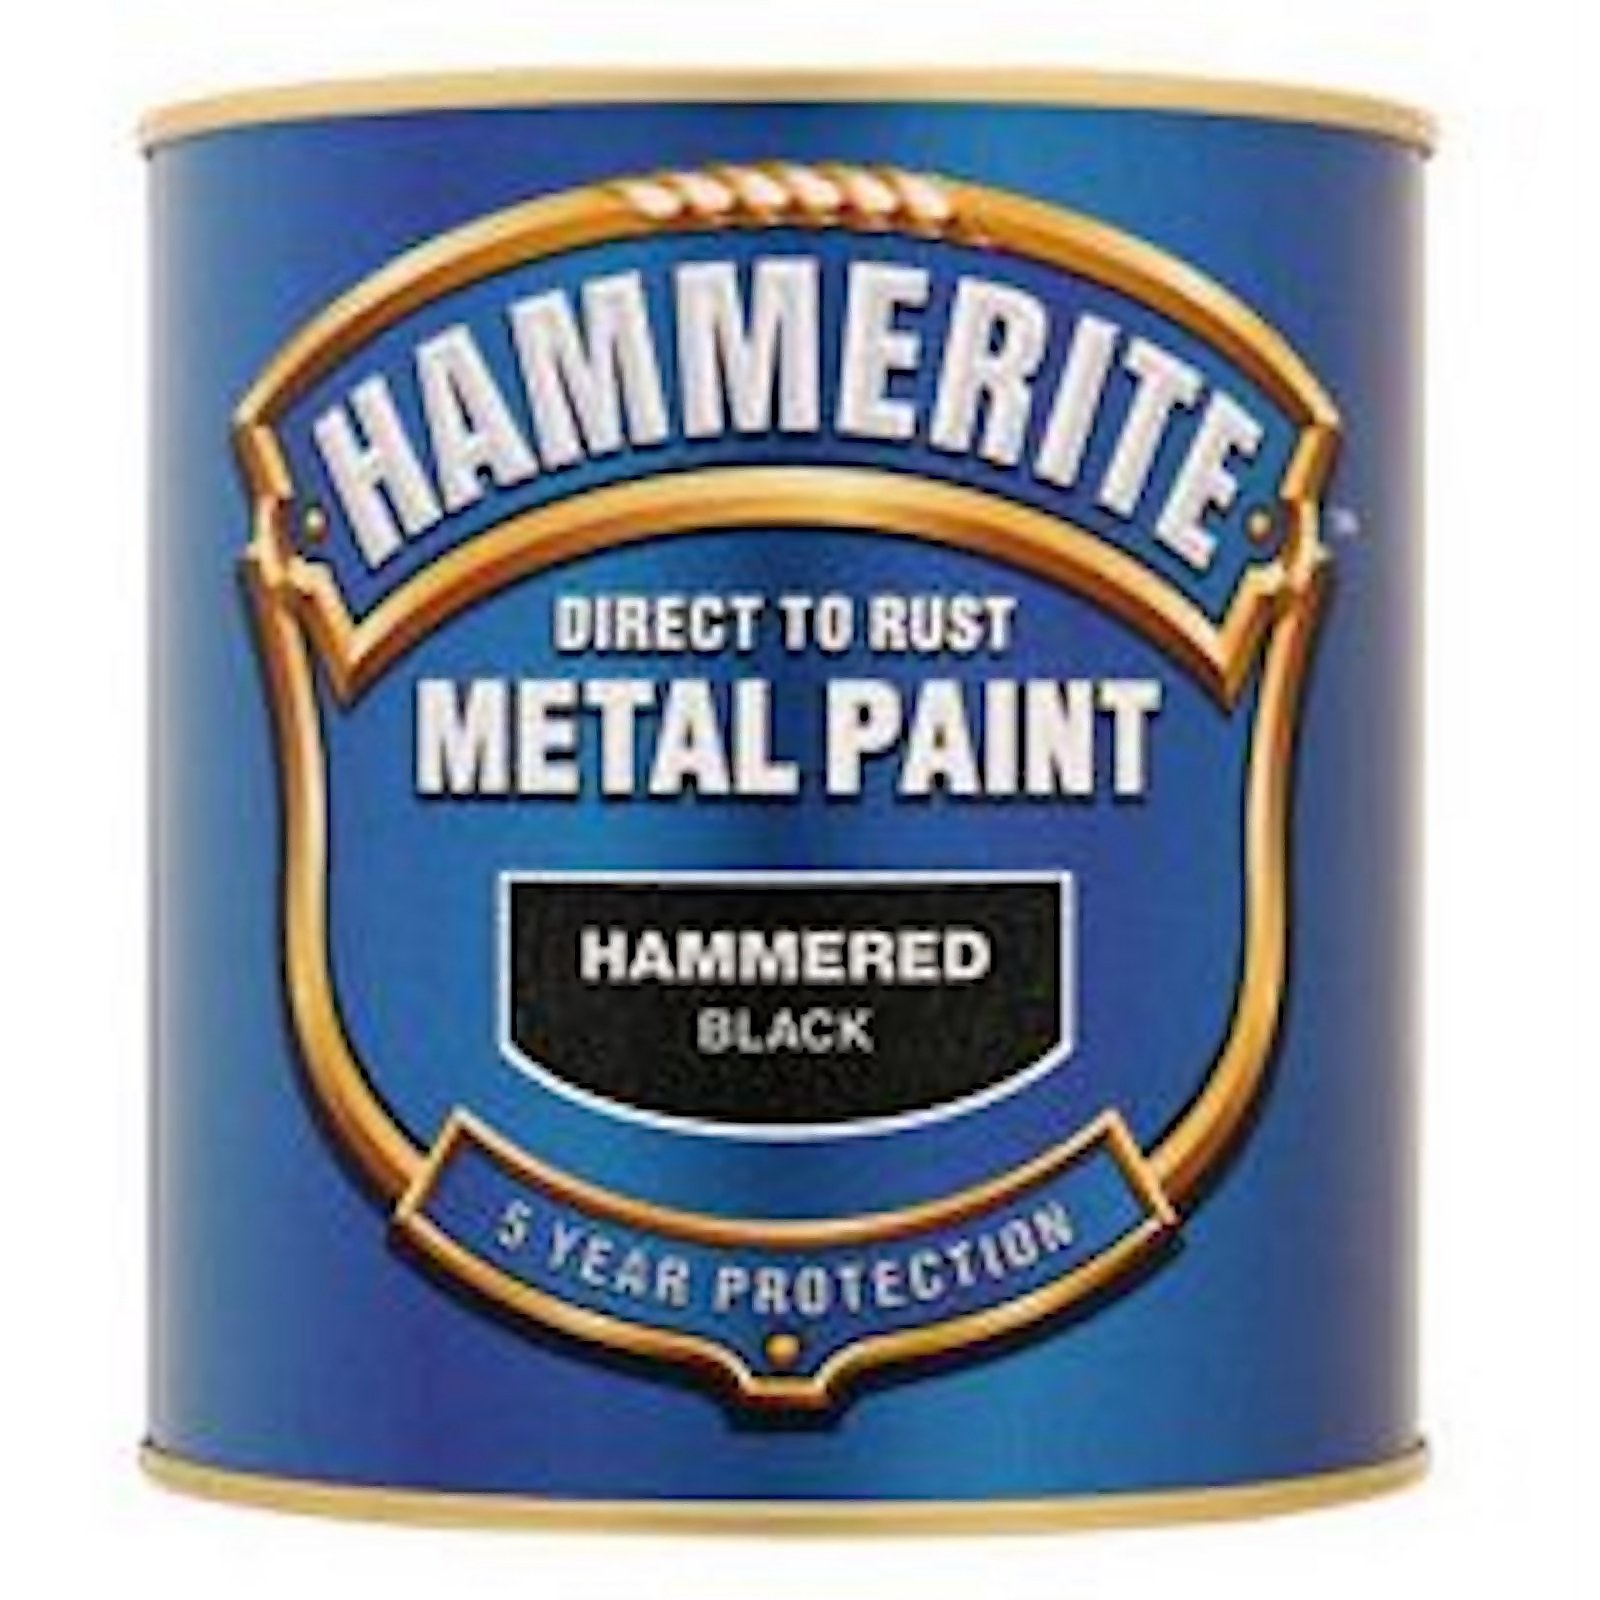 Photo of Hammerite Black - Hammered Exterior Metal Paint - 2.5l